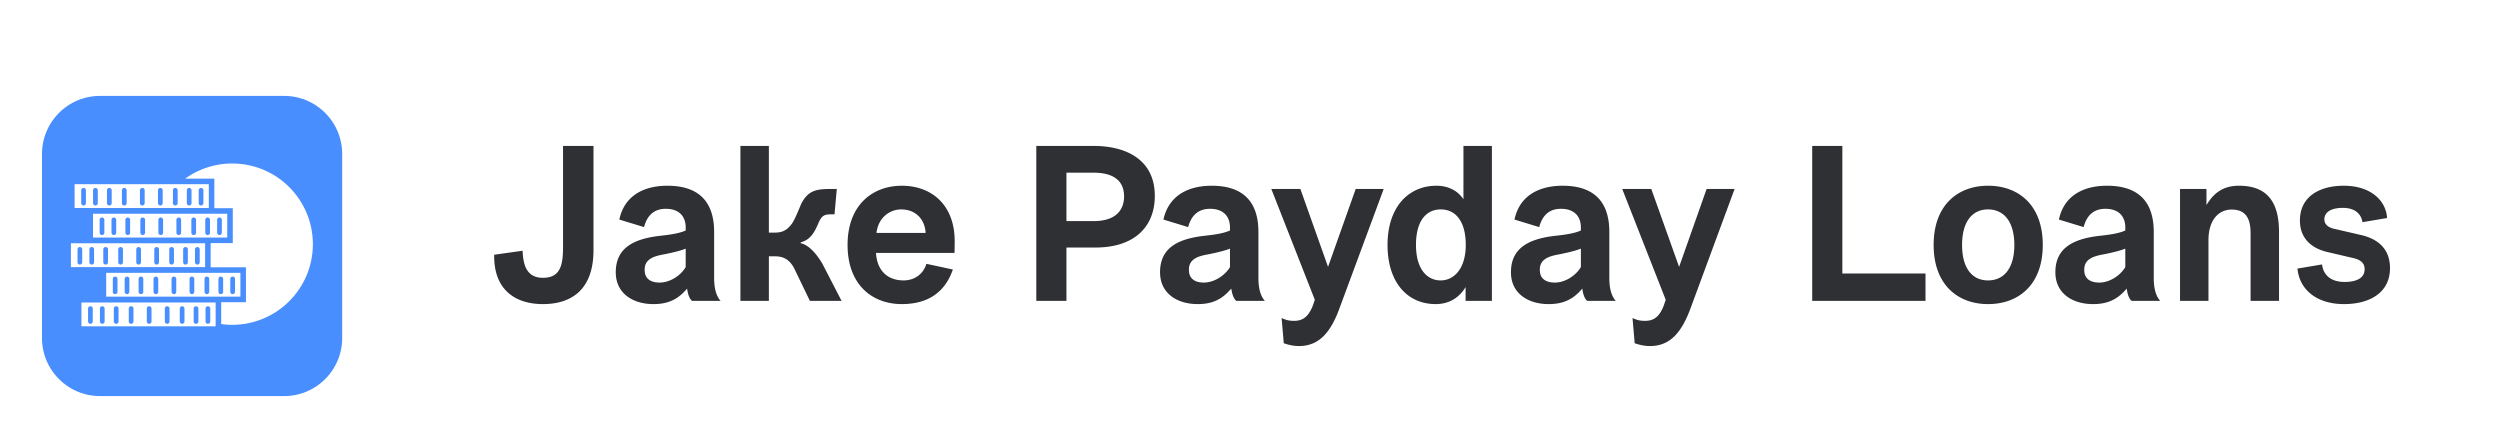 Jake Payday Loans